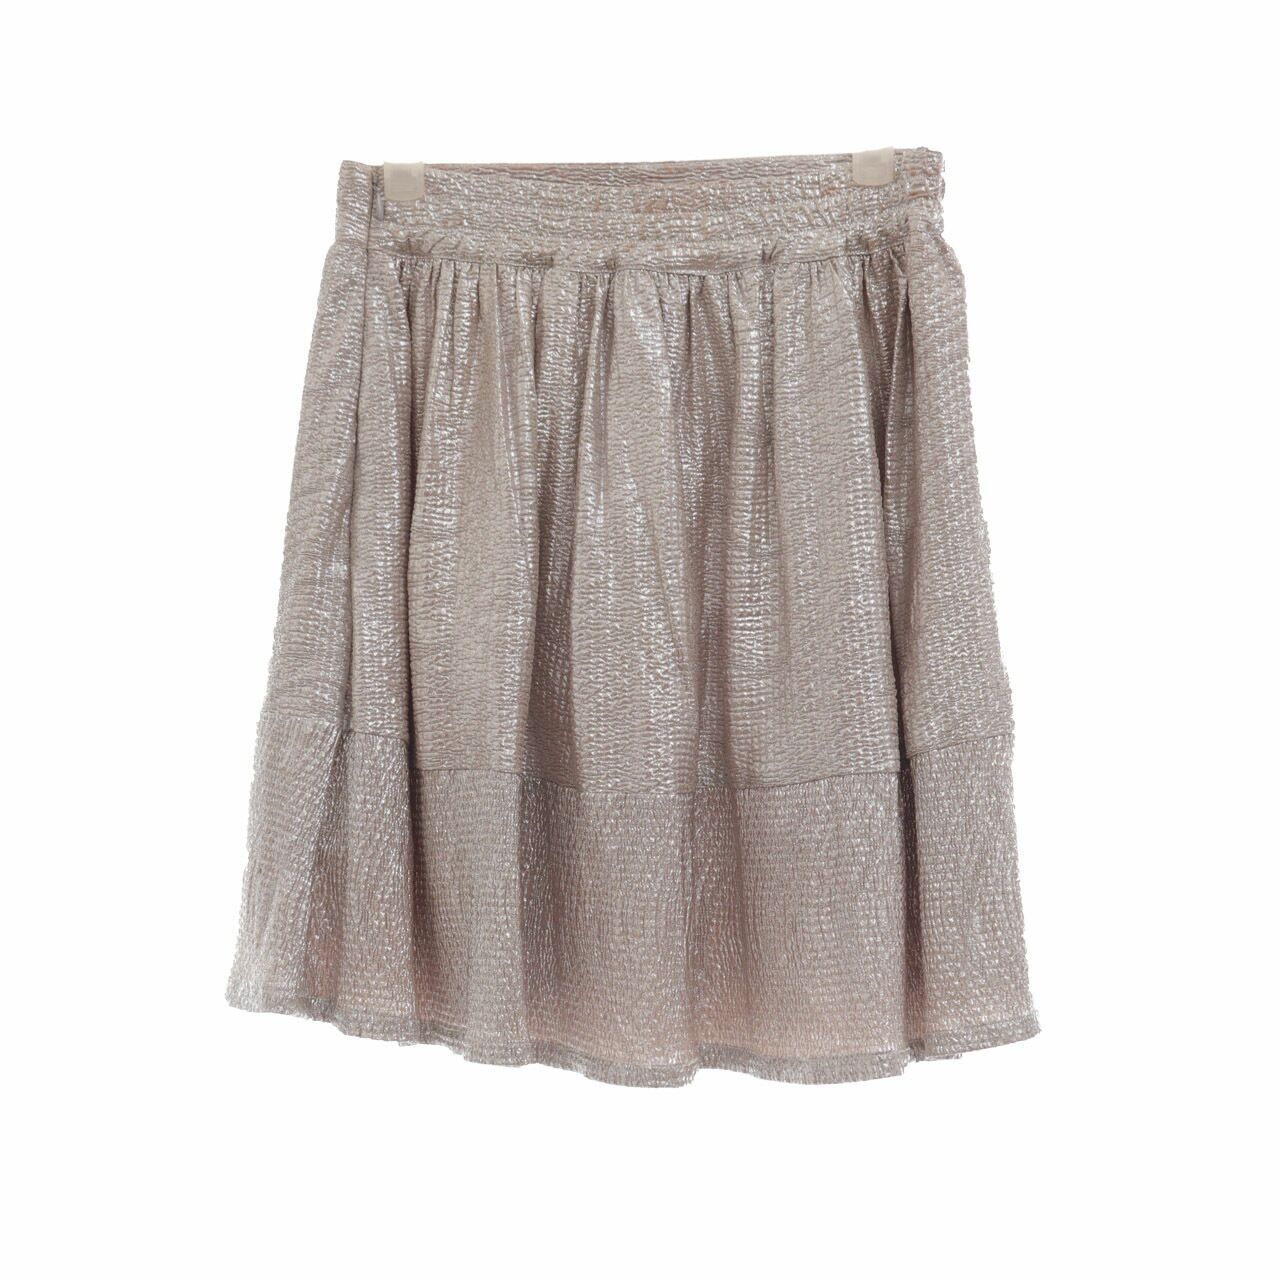 Impromptu Silver Mini Skirt